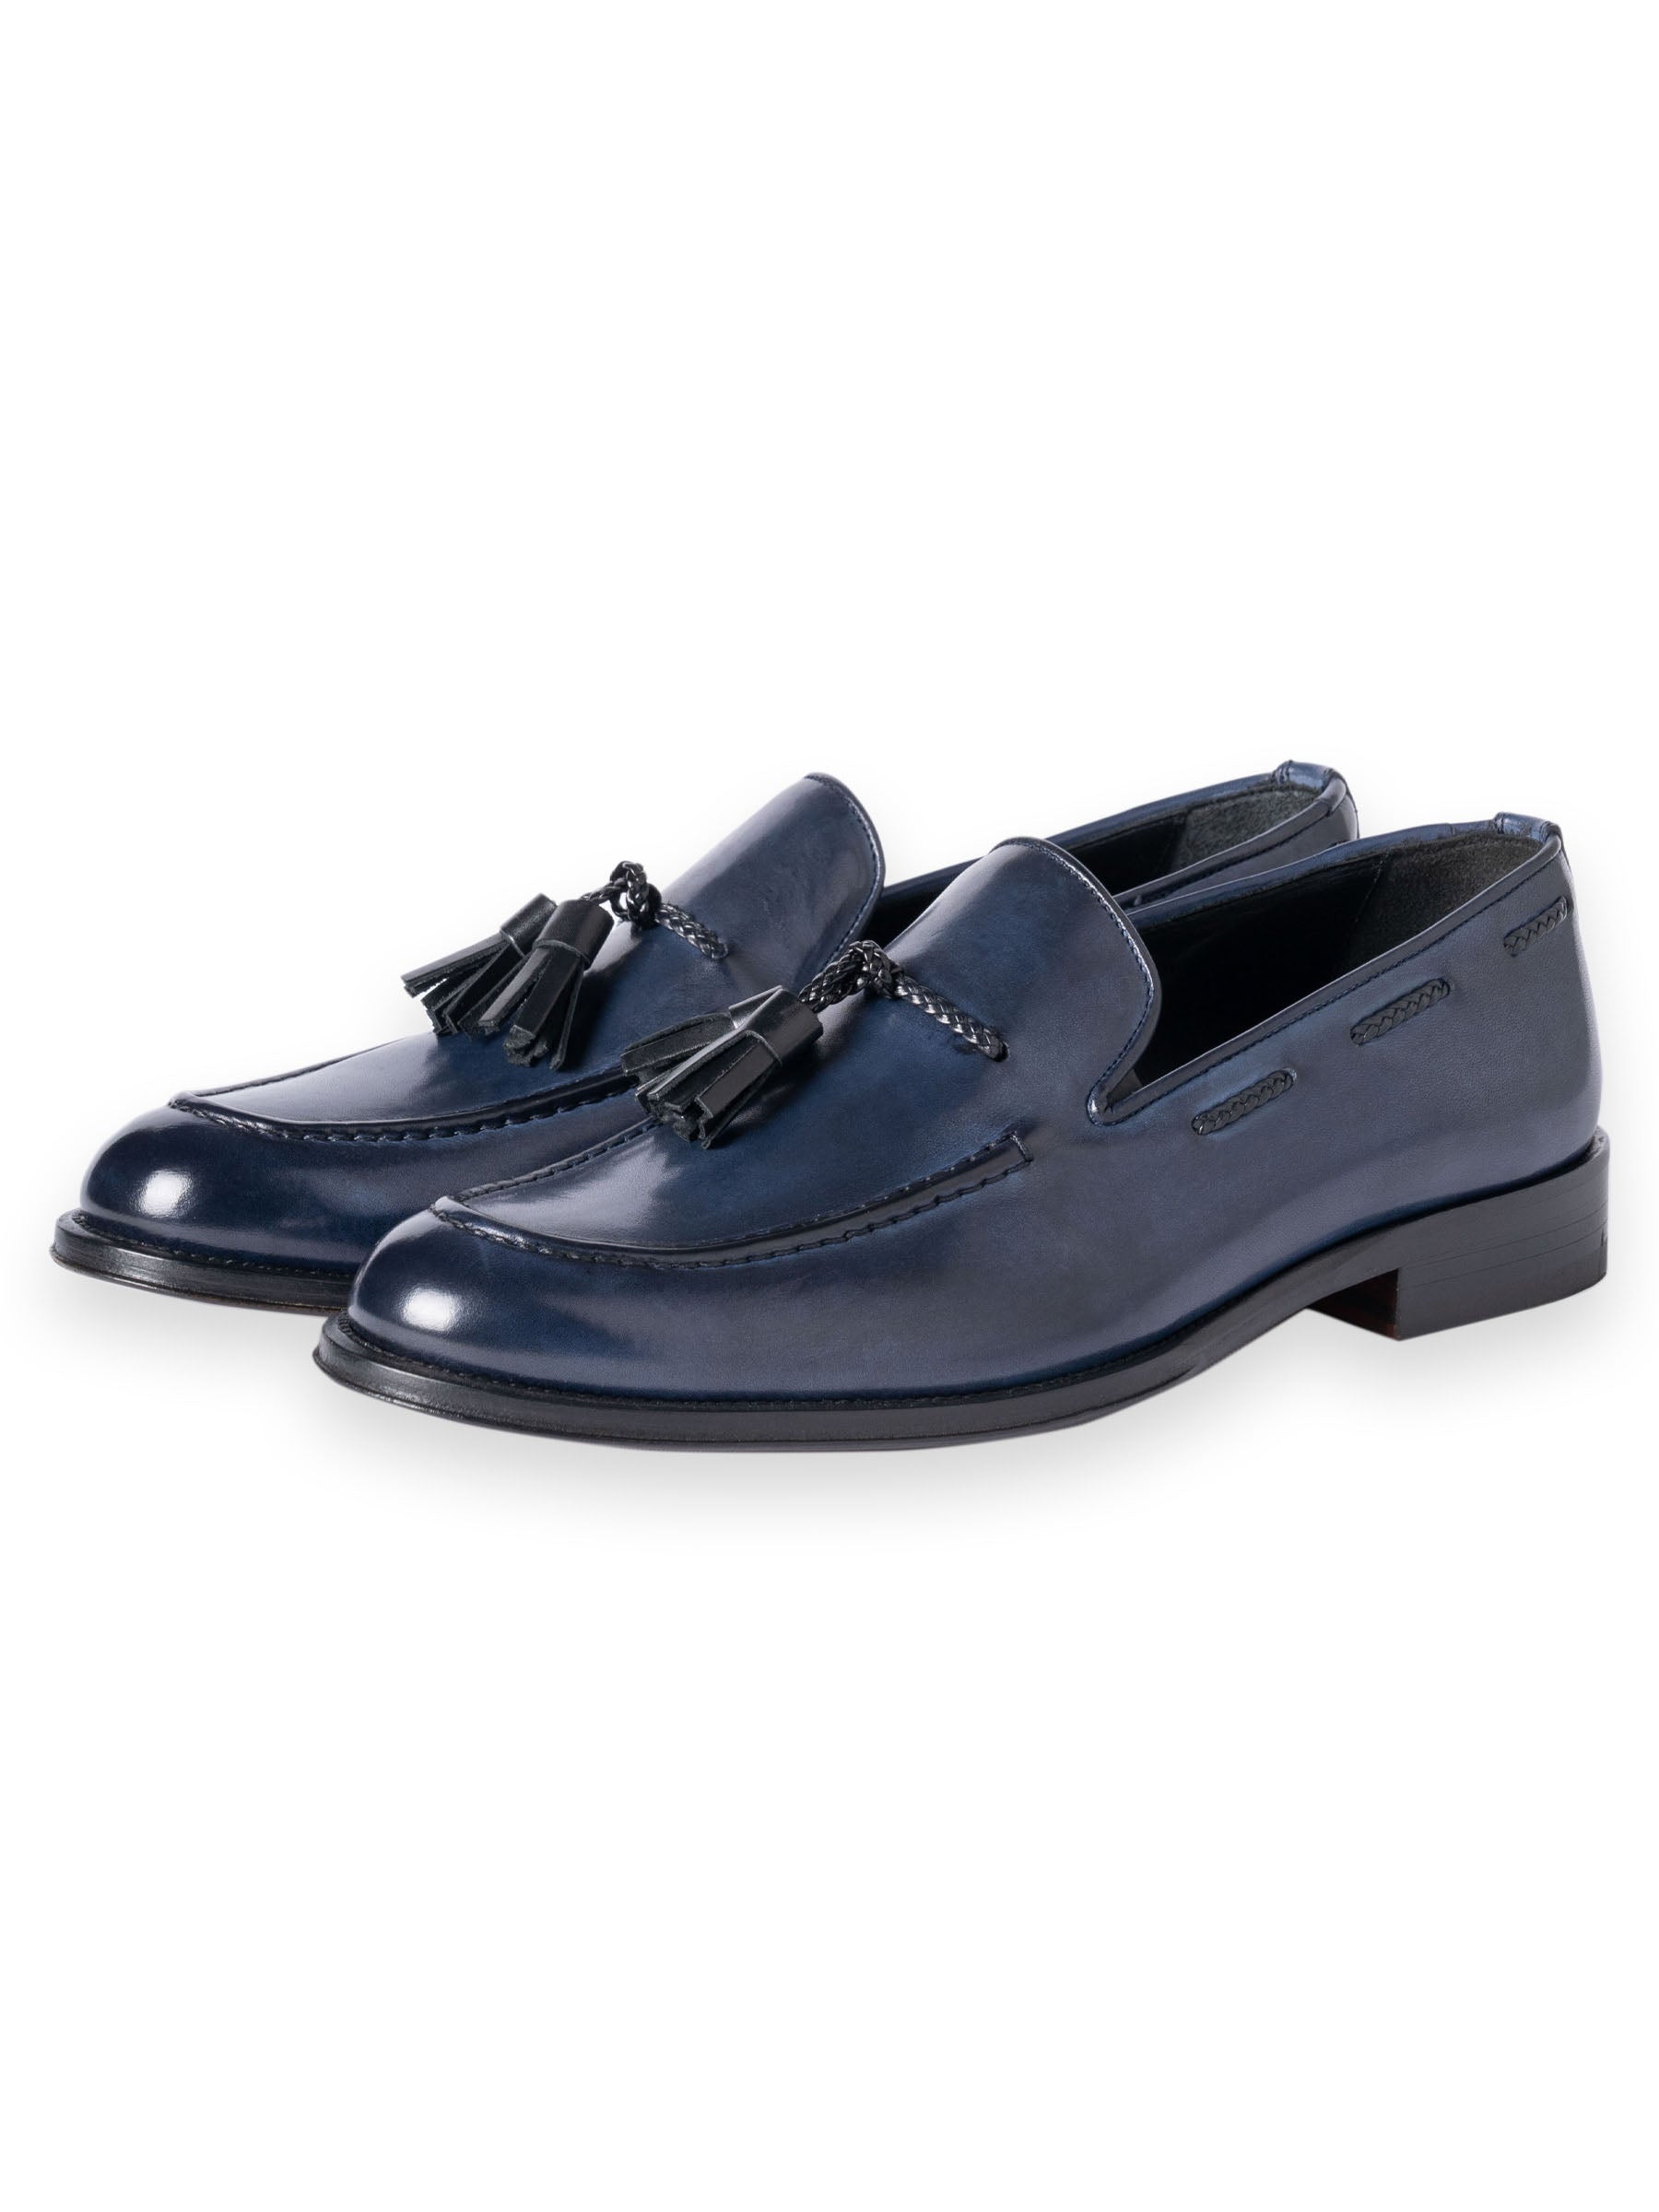 Emilio Italian Leather Loafers - Classic Elegance